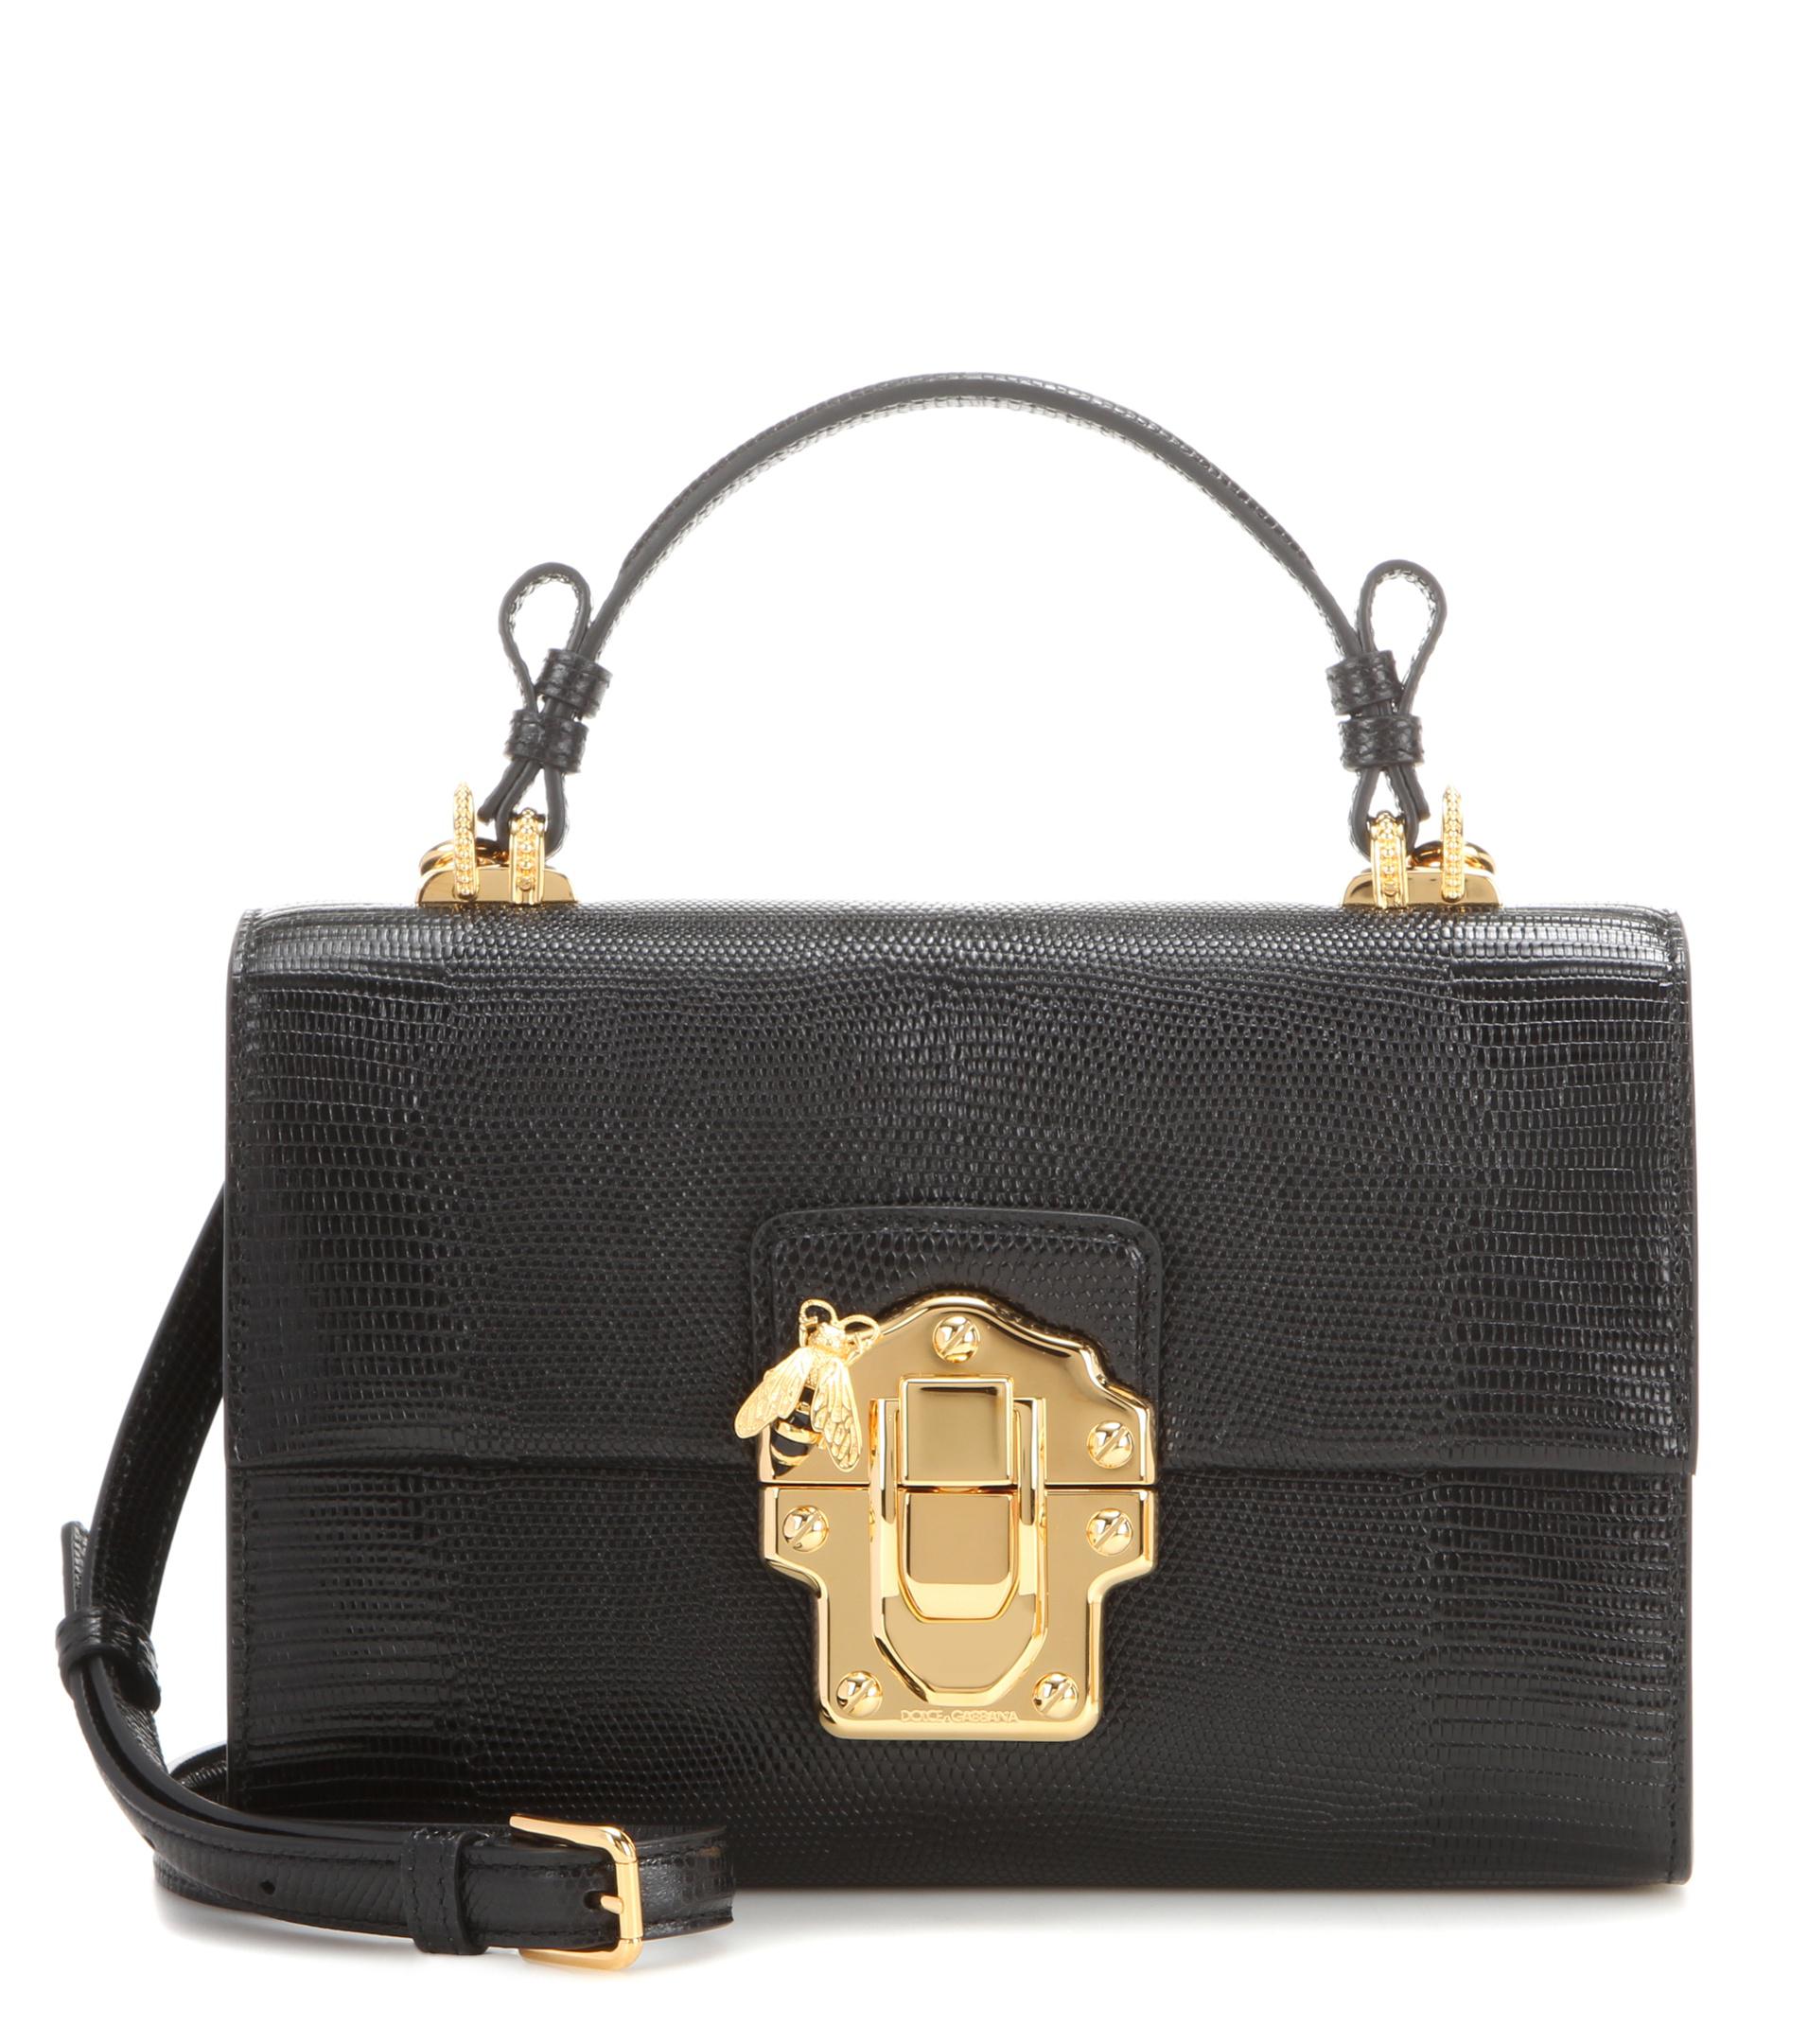 Dolce & Gabbana Lucia Embossed Leather Shoulder Bag in Black - Lyst